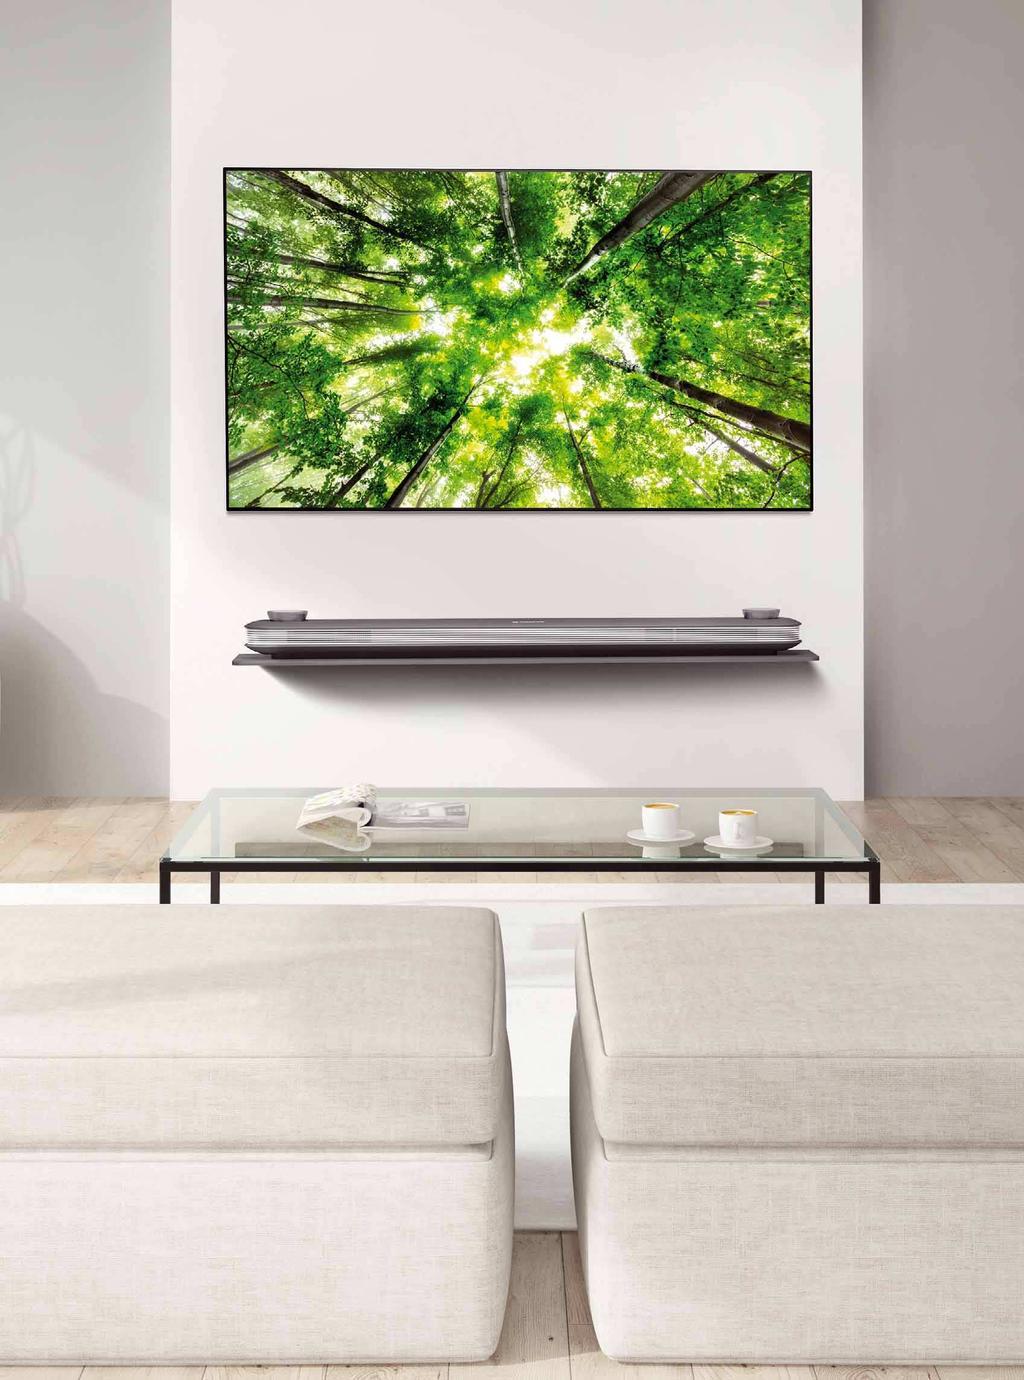 Bild UHD-TV (OLED) Highlight 5/6-2019 Designtipp 5/6-2019